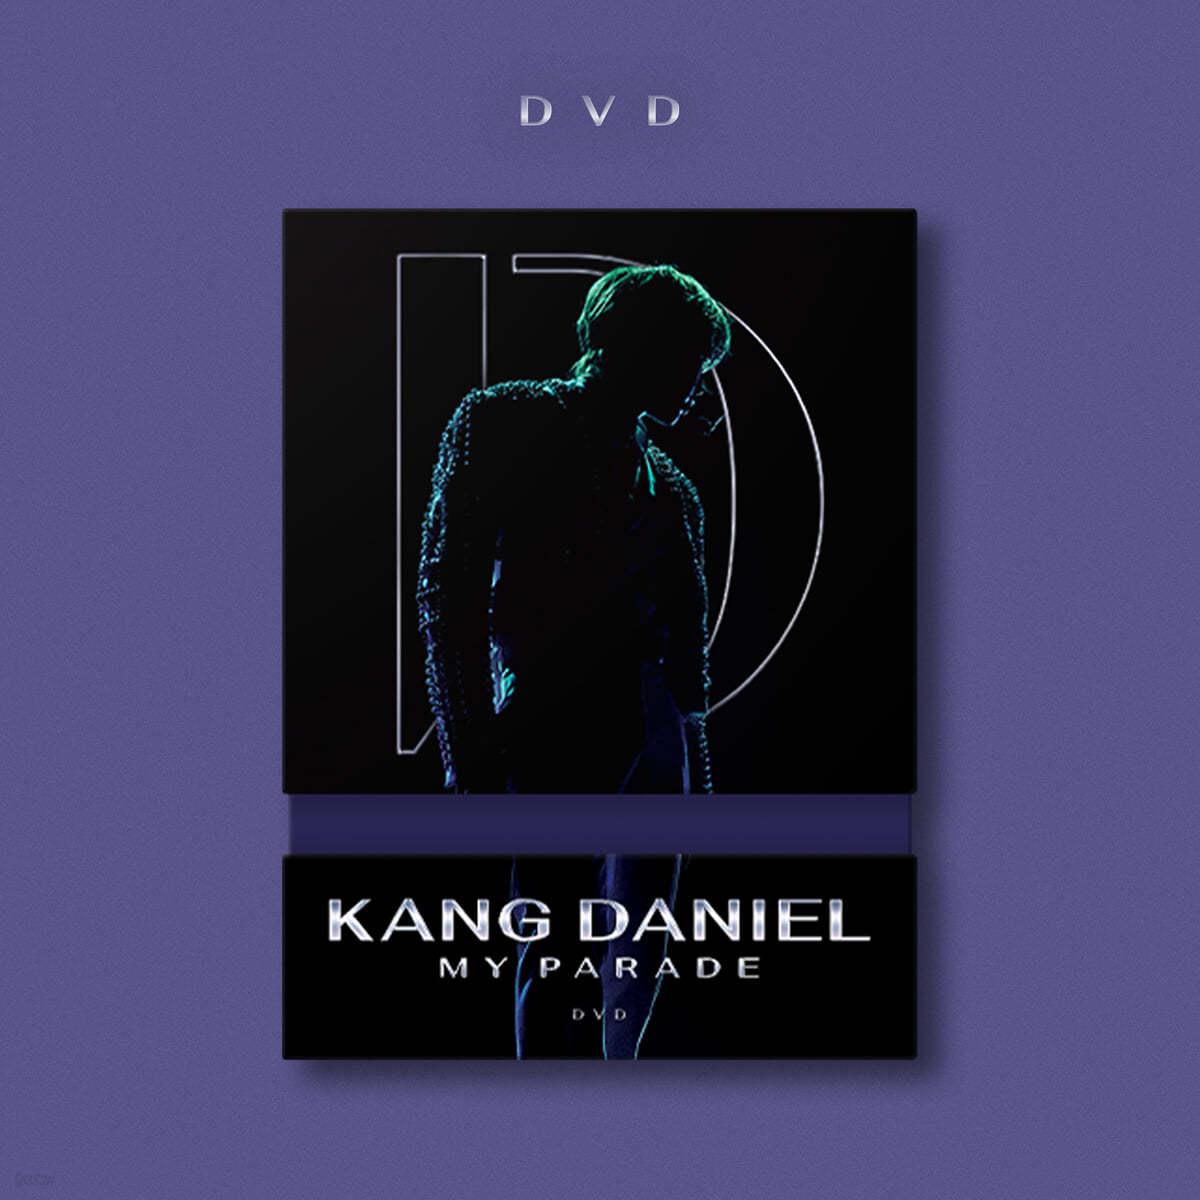 [PRE-ORDER] KANG DANIEL MY PARADE DVD - Shopping Around the World with Goodsnjoy